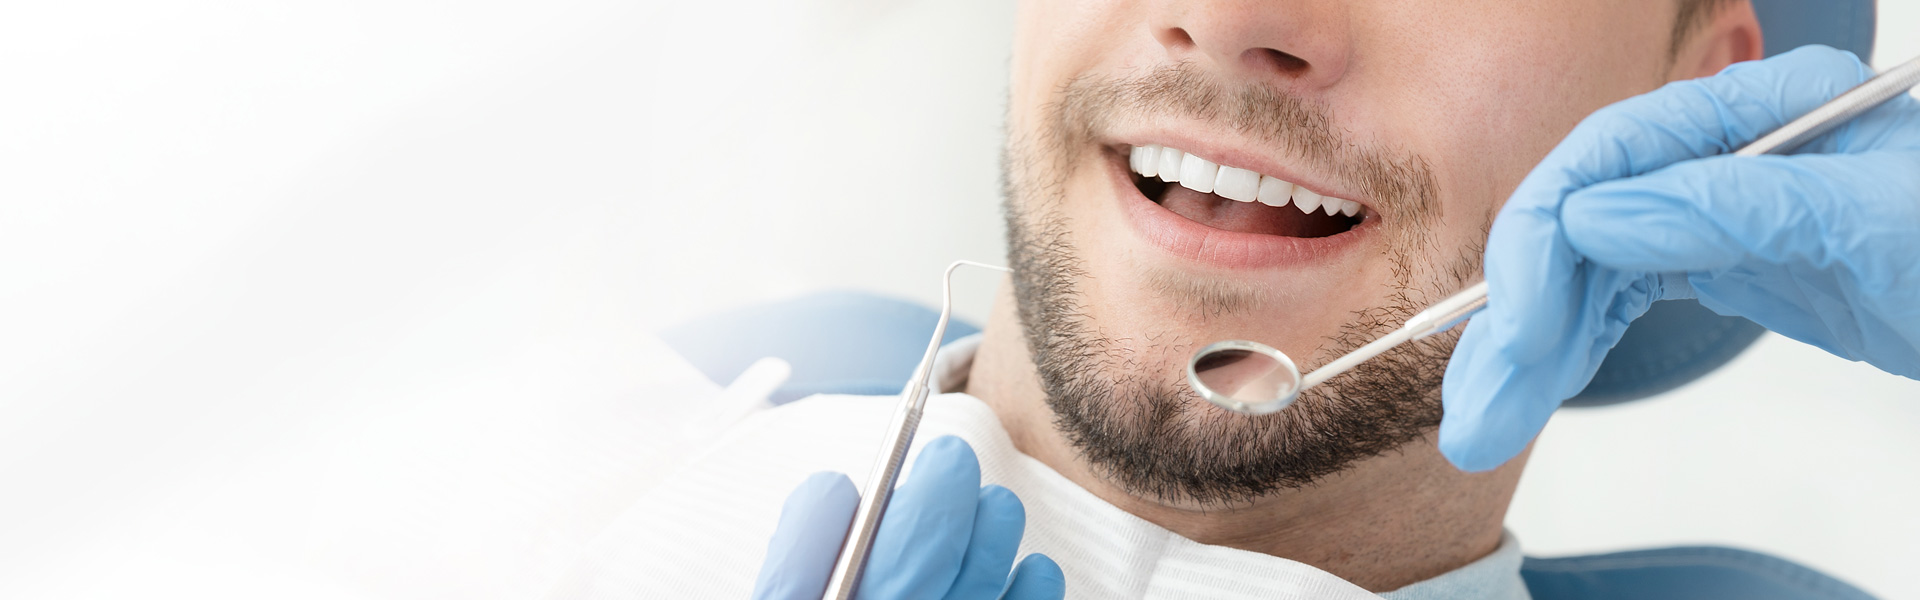 Los mejores avances dentales en Talavera en Clinica dental Sevilleja